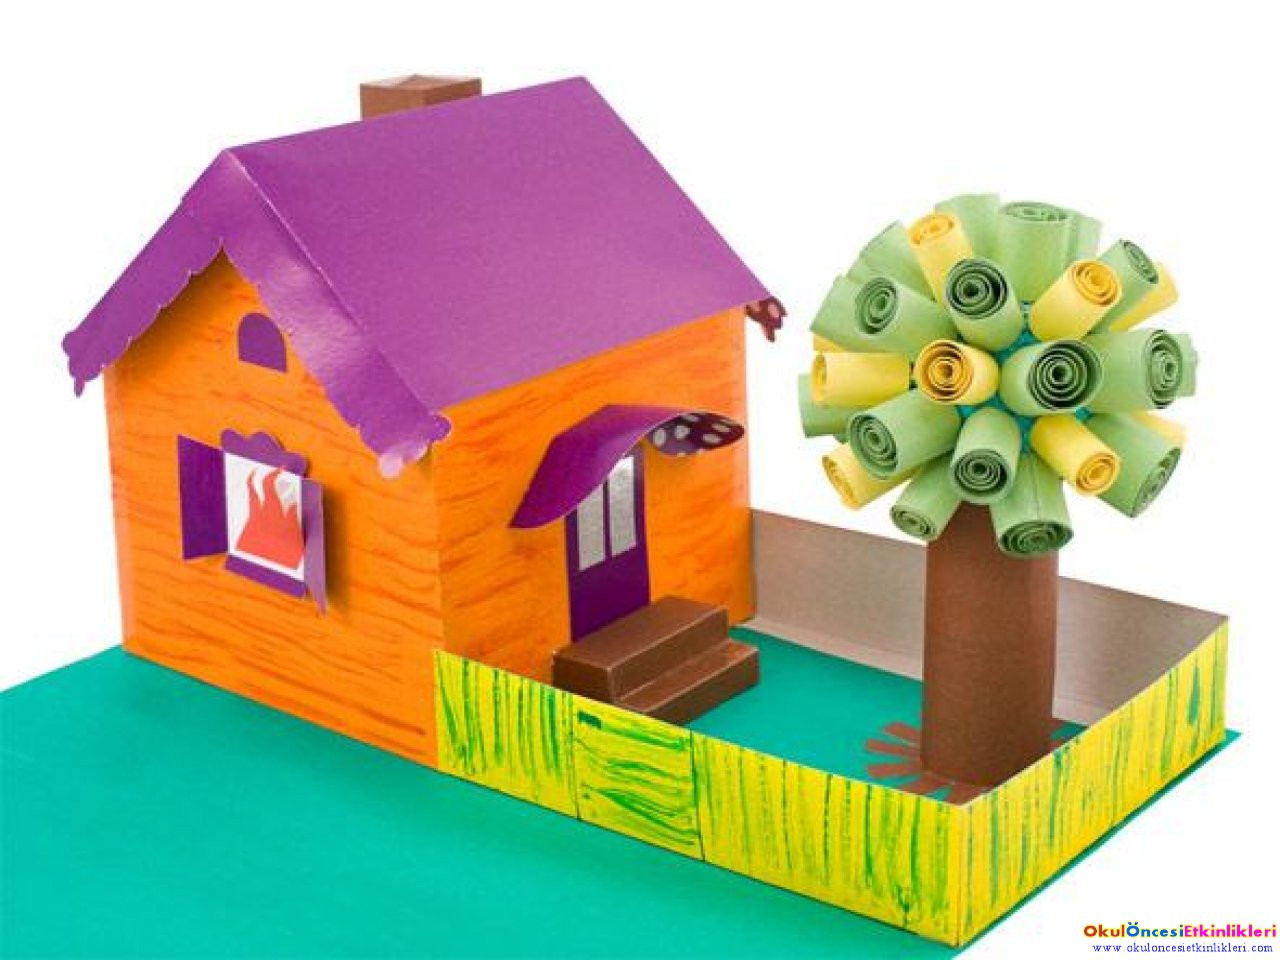 Arts And Crafts For Toddlers At Home
 ev yapımı maket kağıttan ev yapımı için maket olarak